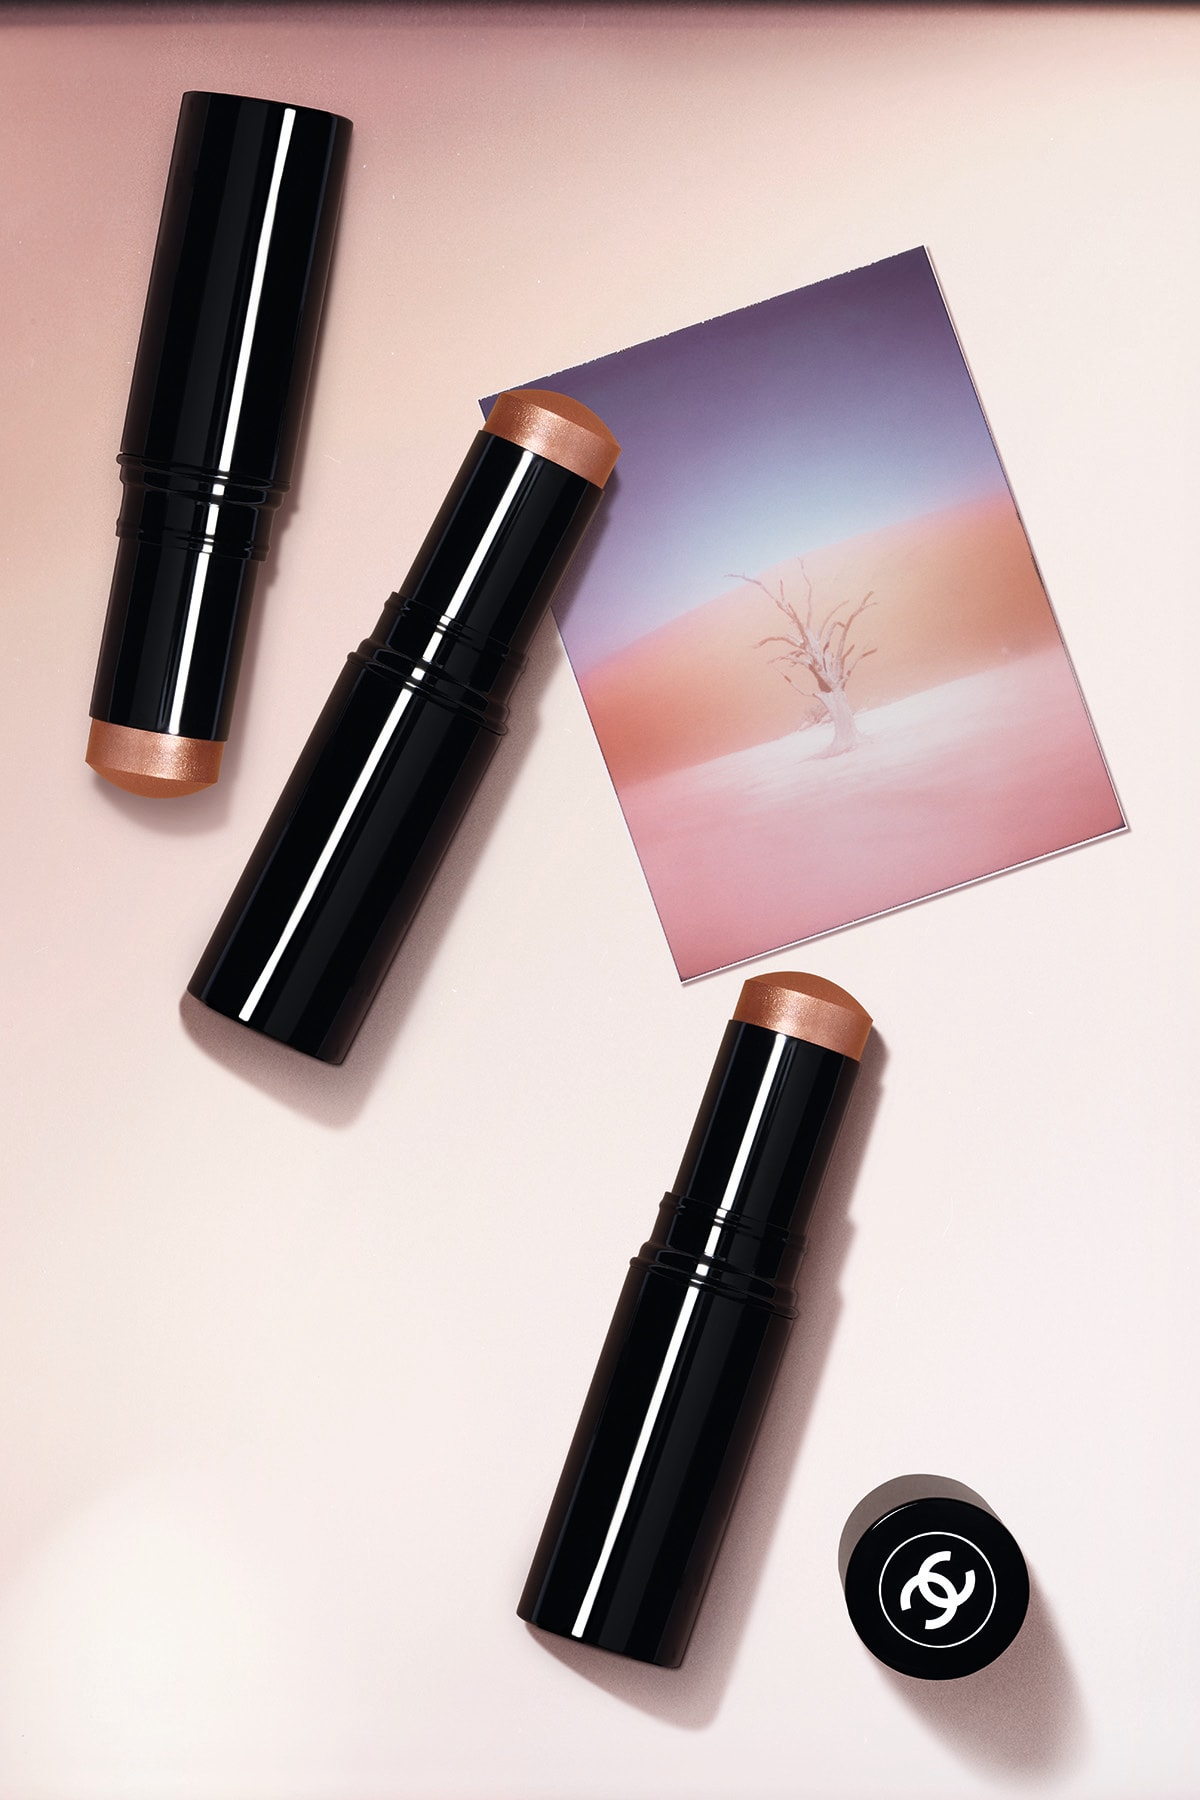 Chanel SS20 "Desert Dream" Makeup Collection Baume Essential Glow Stick Highlighter